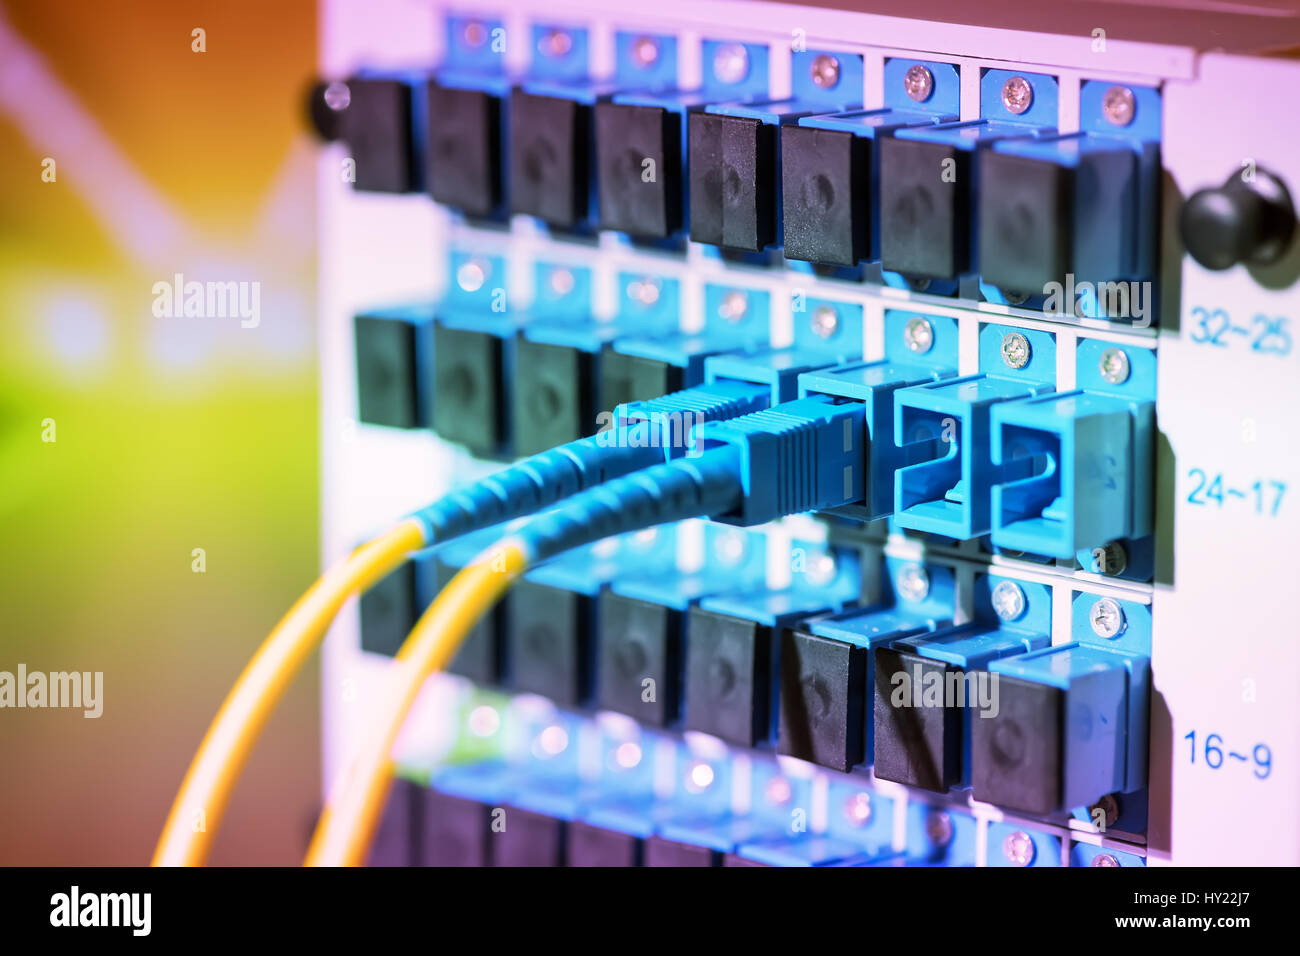 fiber optic telecommunication cables on blur background Stock Photo